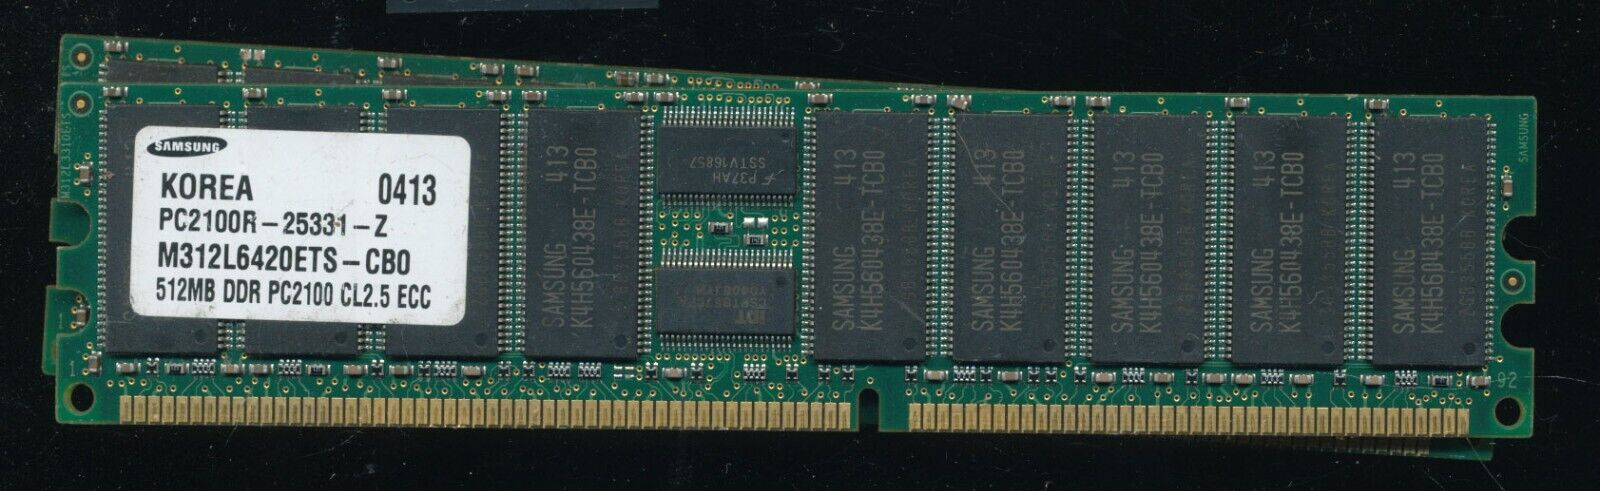 Samsung 1GB Kit (512MBx2) DDR266 PC2100 RAM ECC Samsung Chips